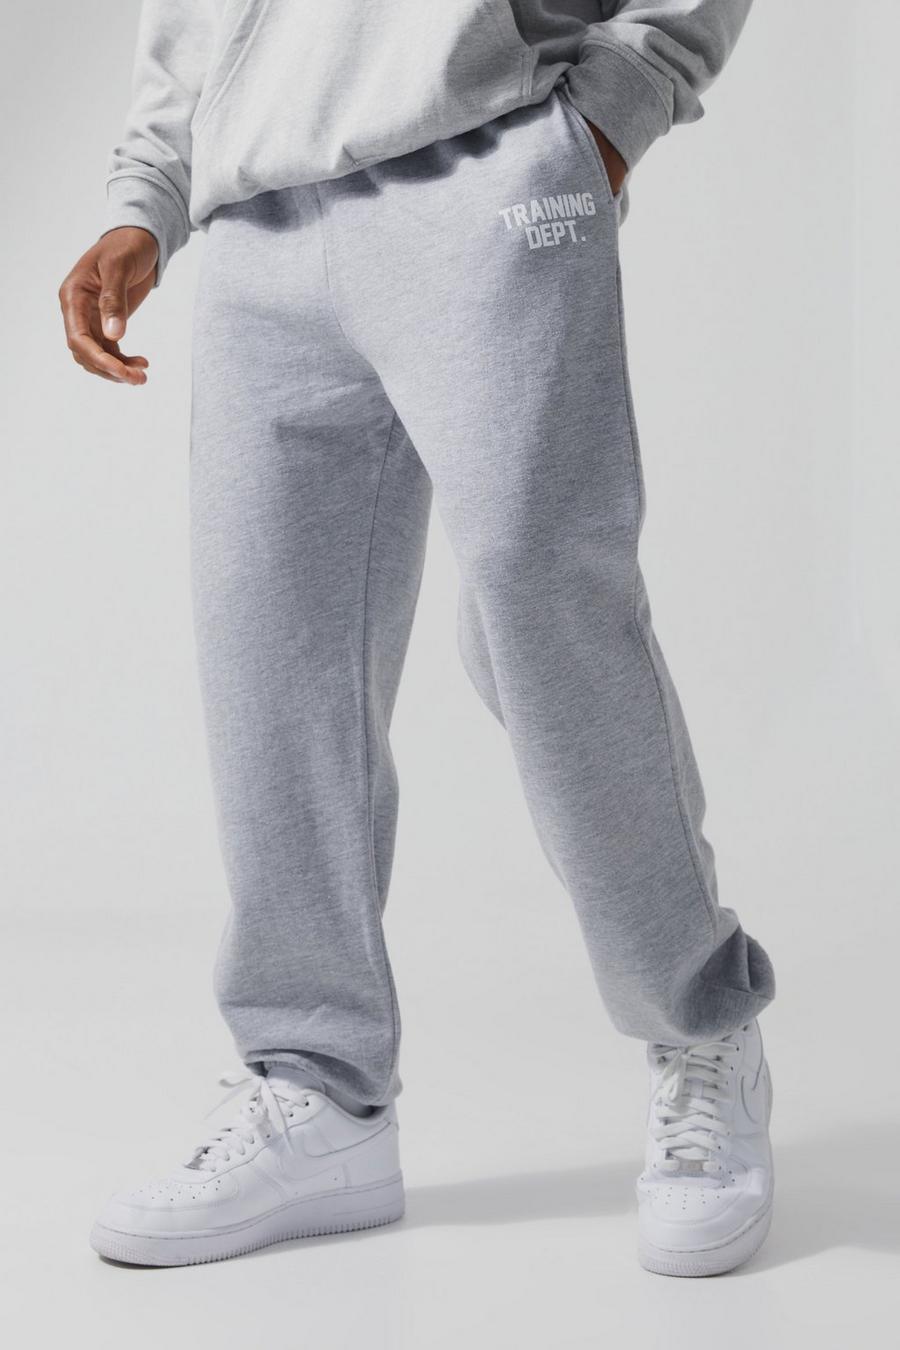 Pantaloni tuta oversize Man Active Training Dept, Grey marl image number 1